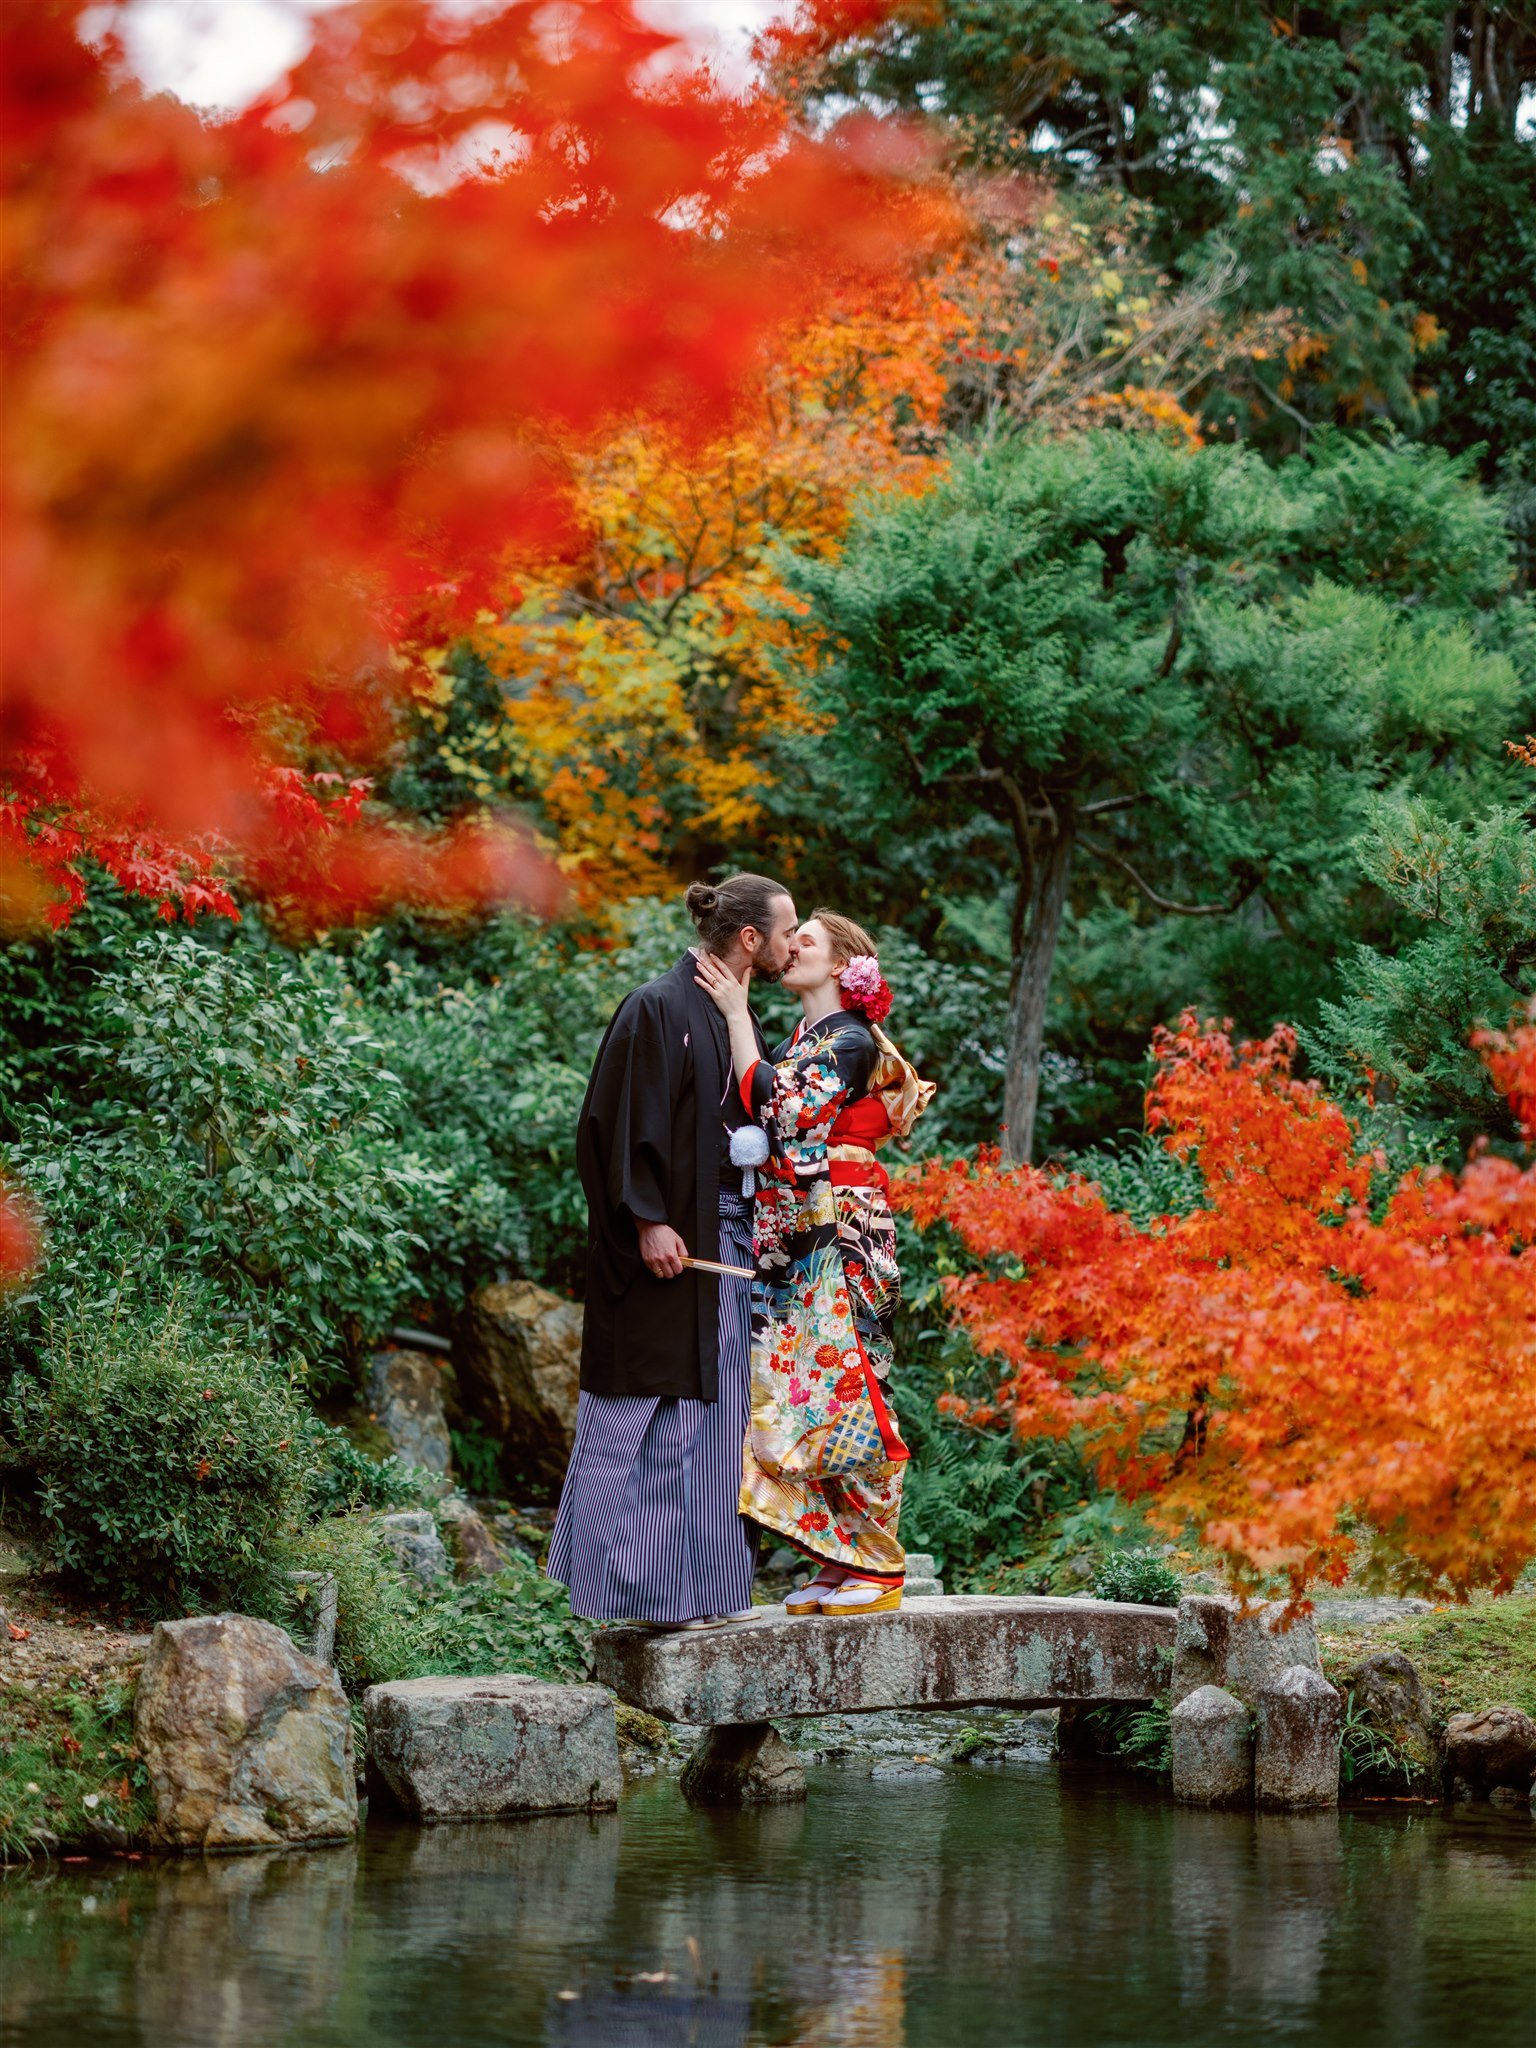 Wedding photographer in Kyoto